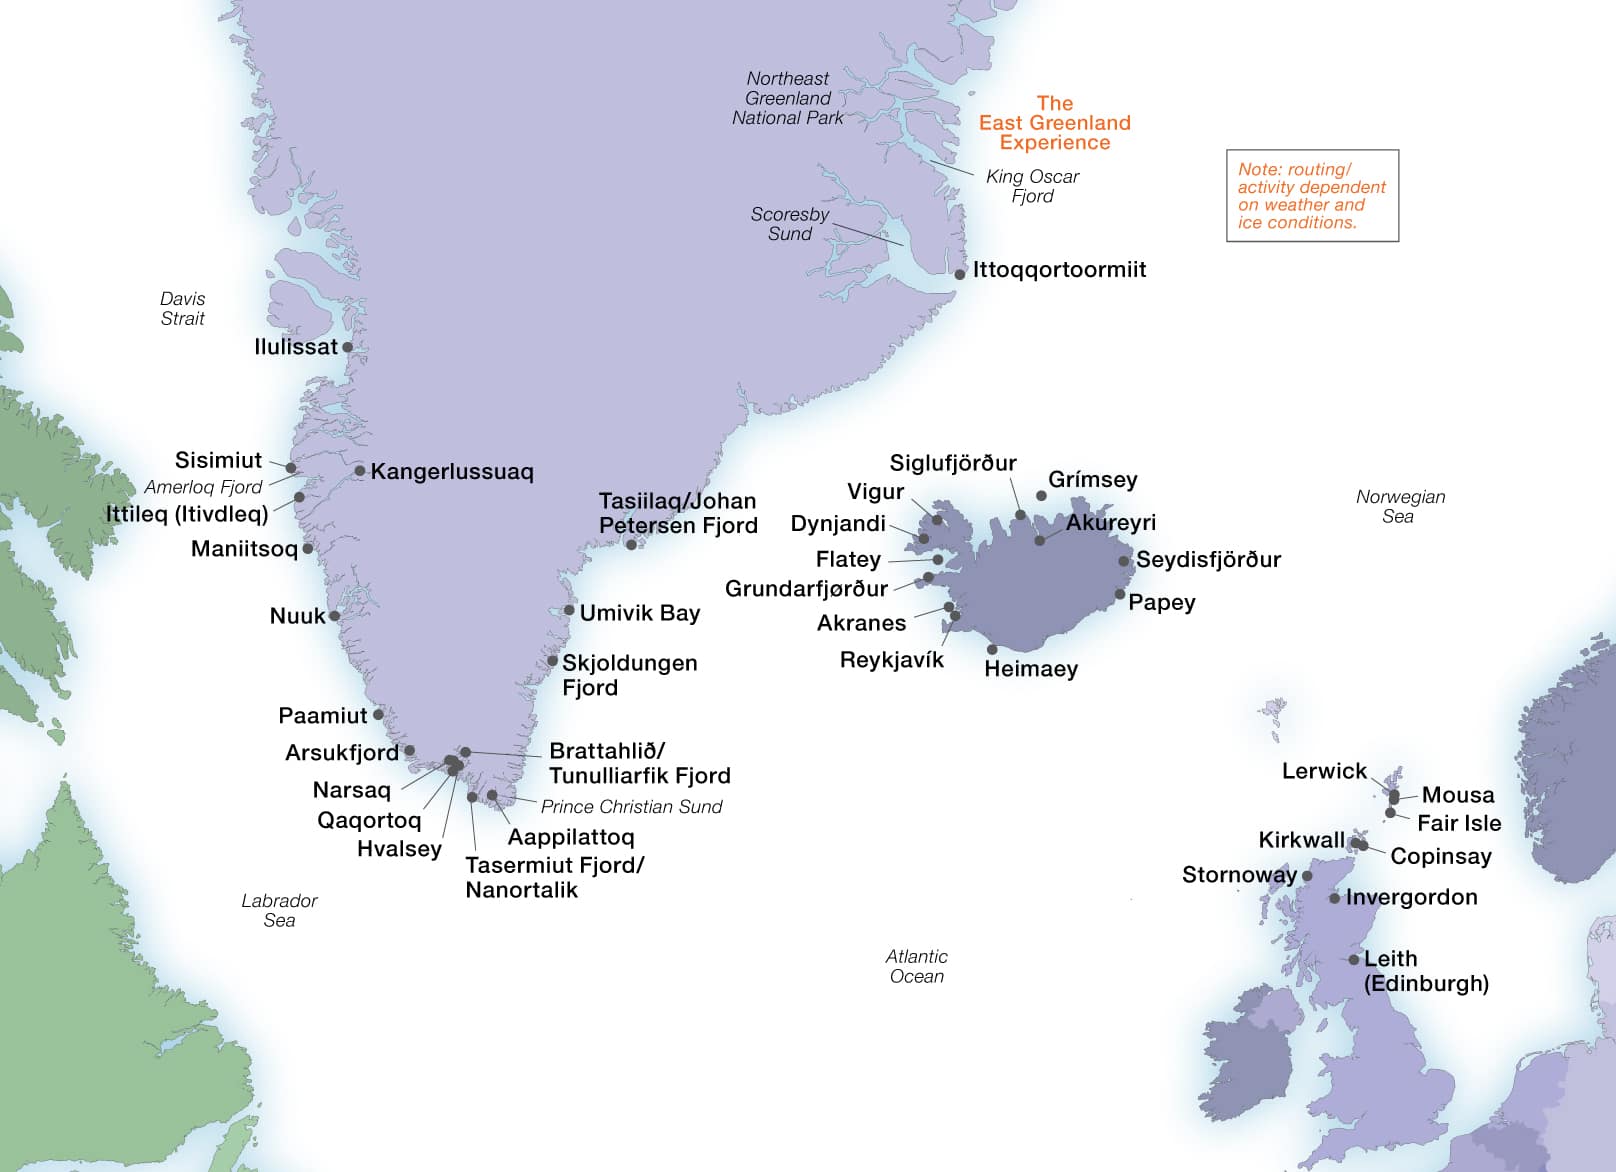 Seabourn's Arctic ports map